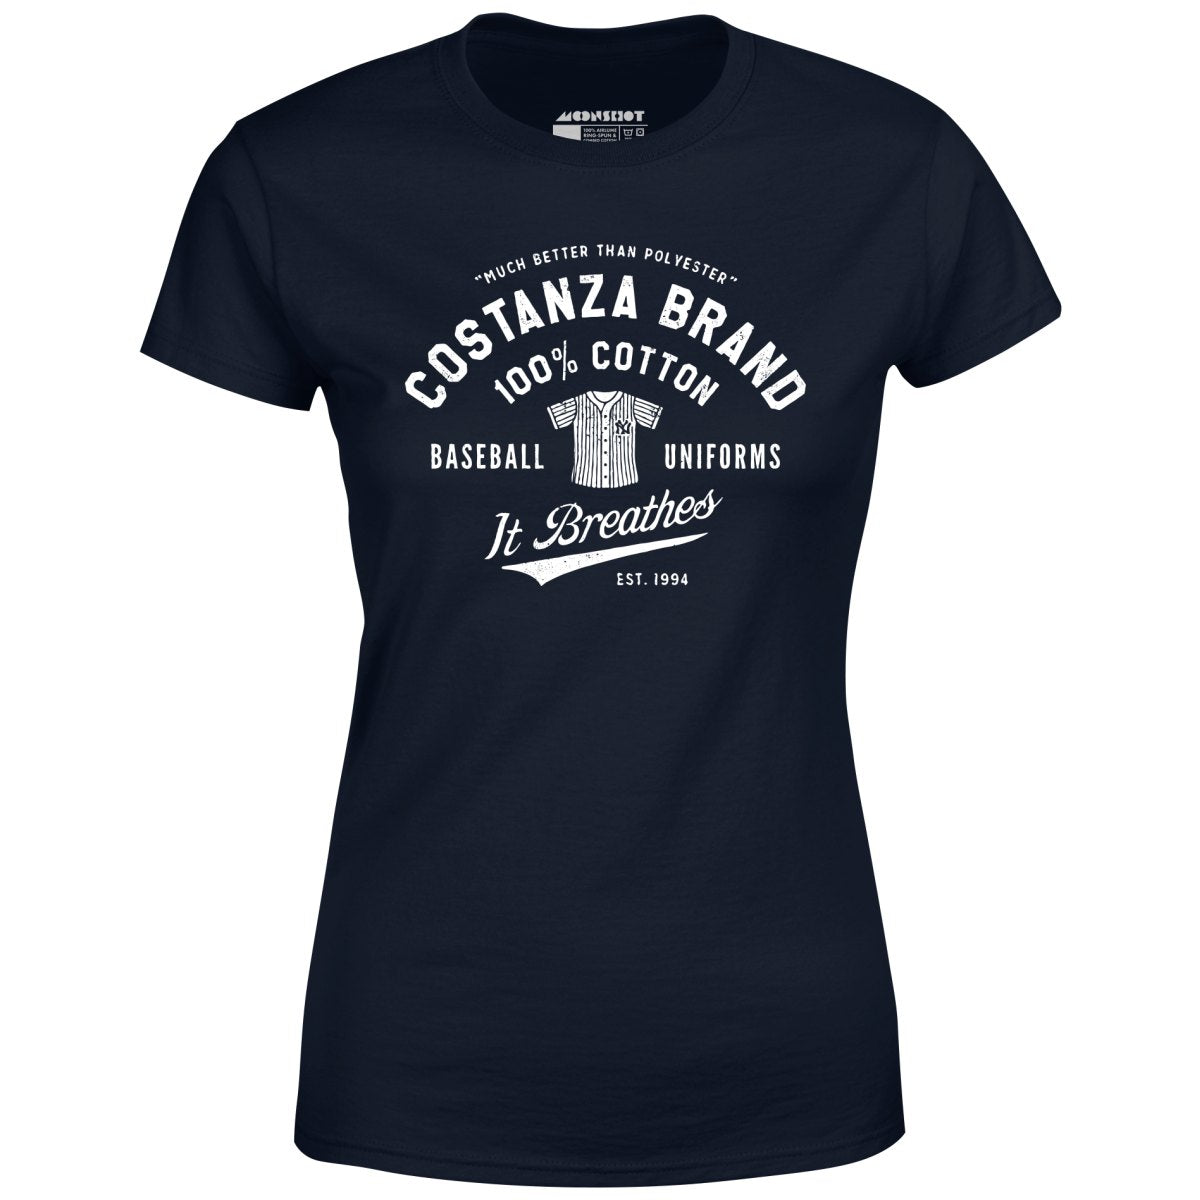 Costanza Brand Cotton Baseball Uniforms - Women's T-Shirt